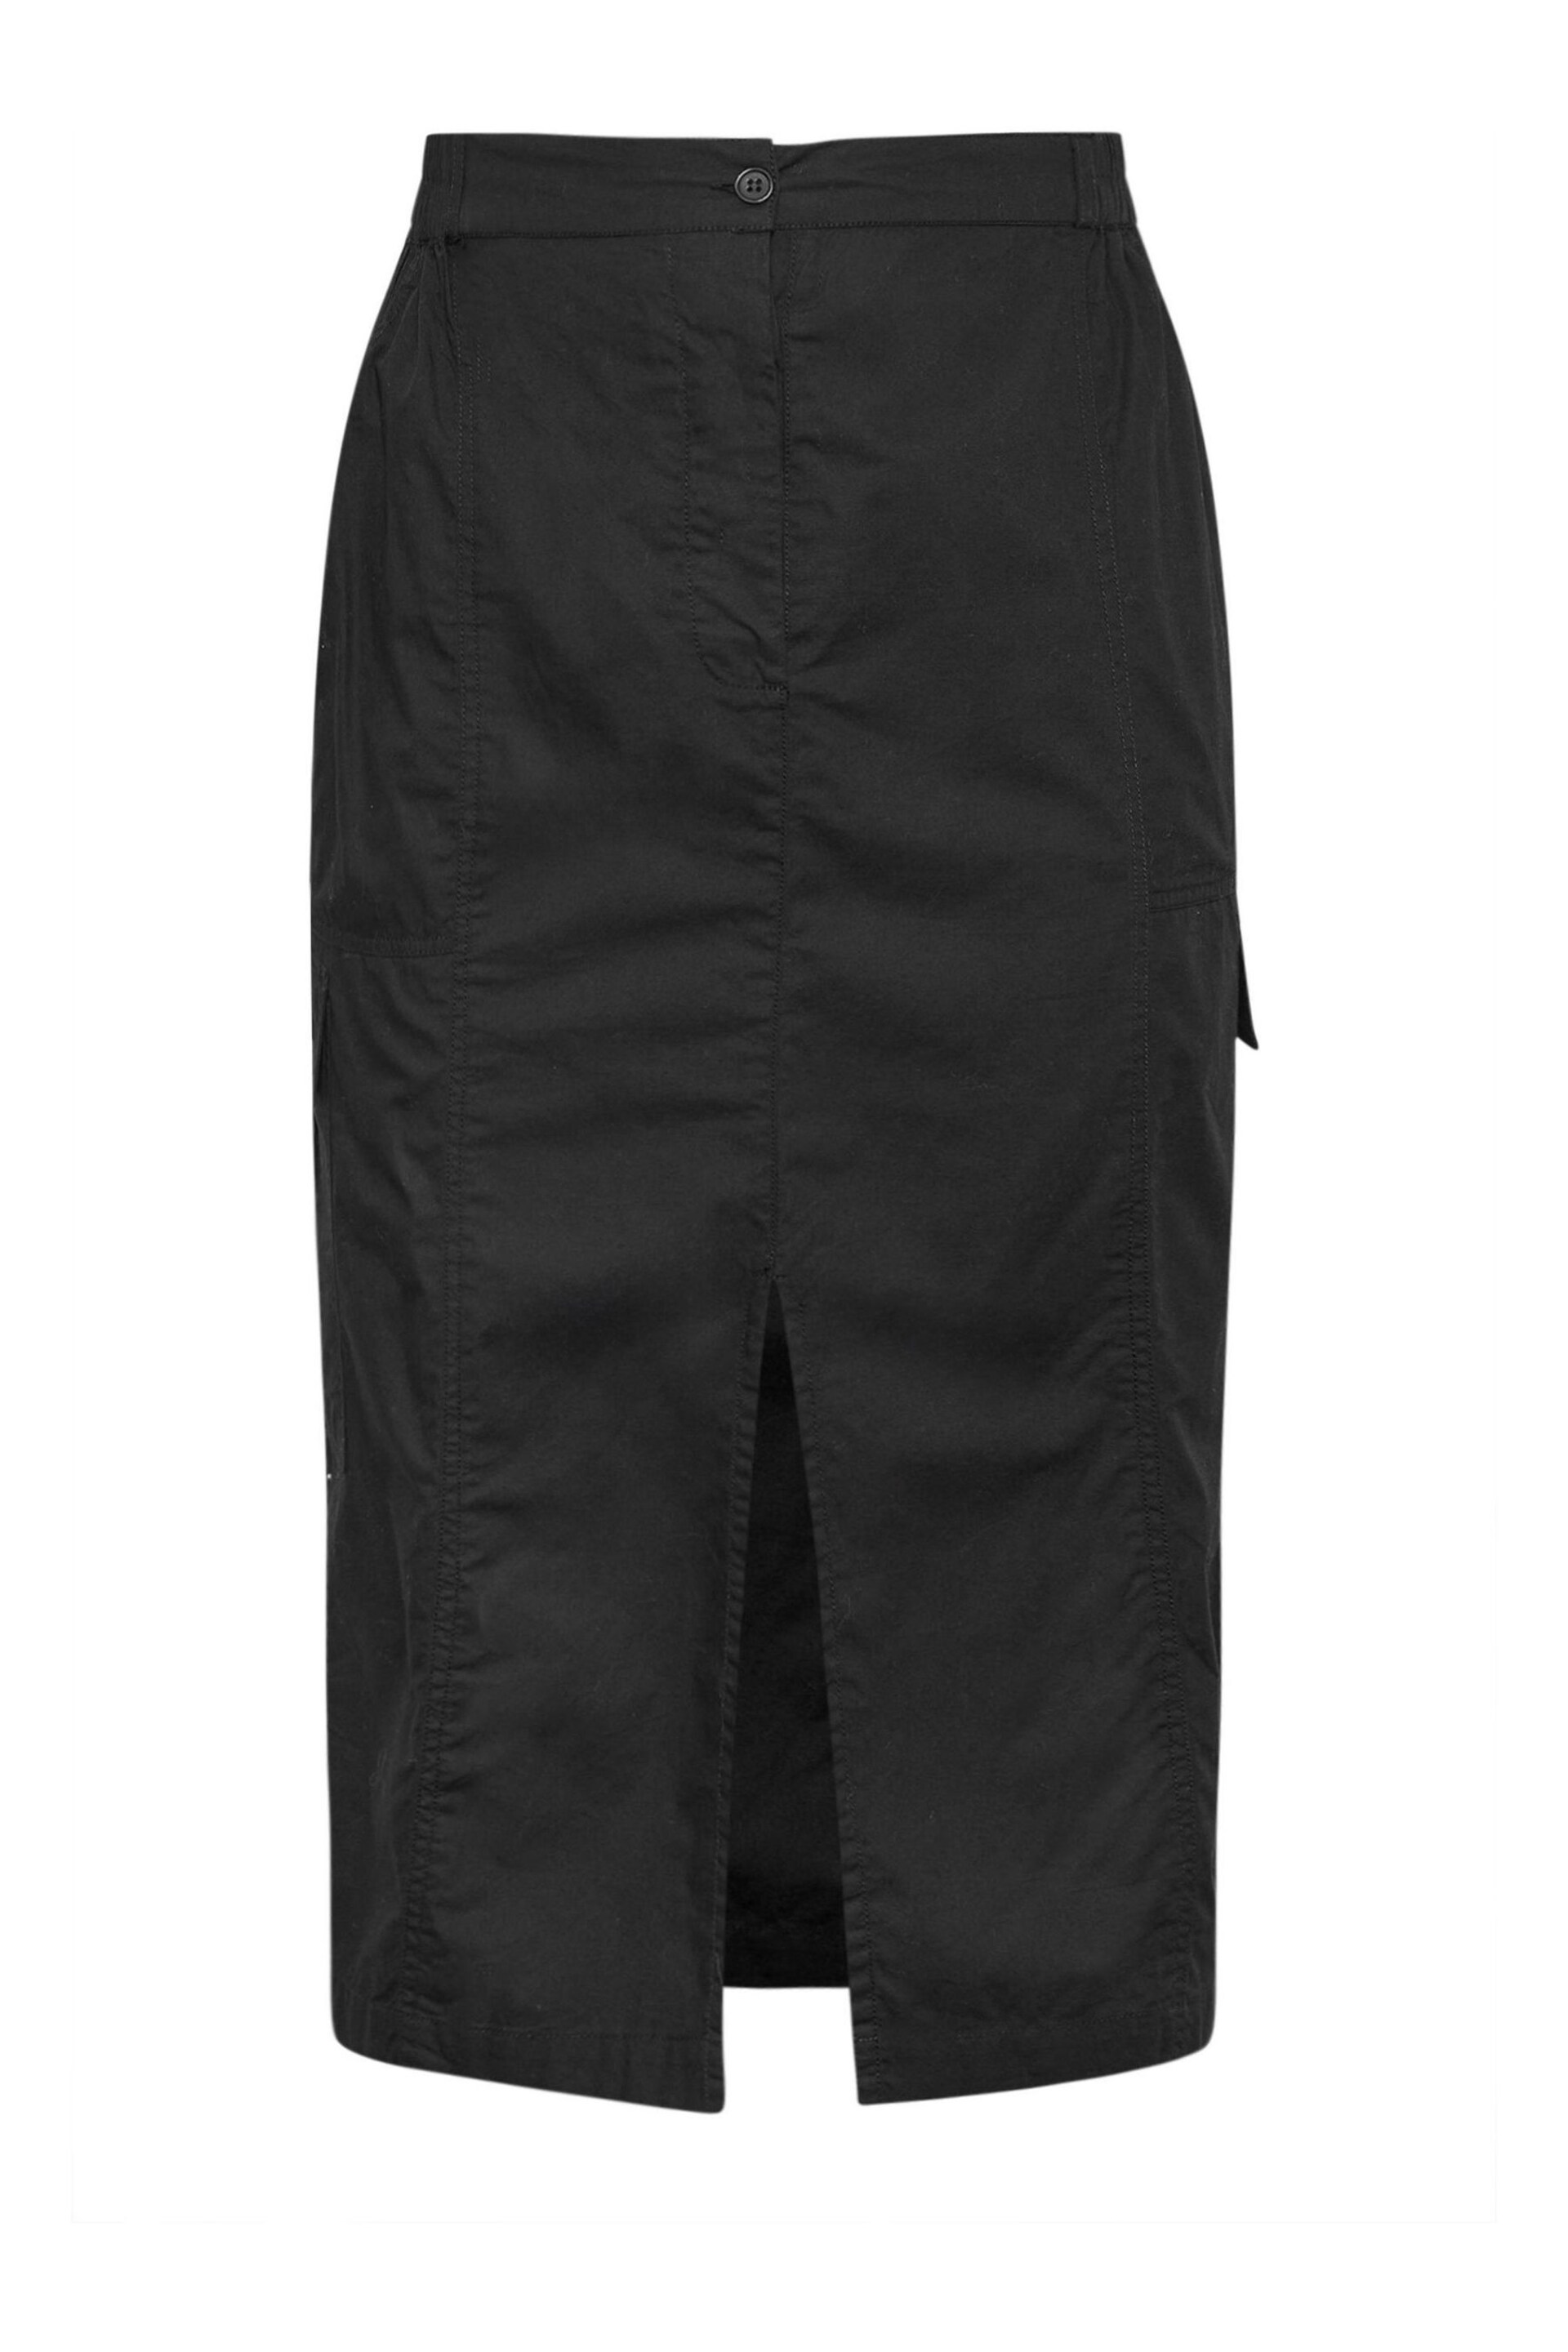 Yours Curve Black Split Hem Cargo Midi Skirt - Image 5 of 5